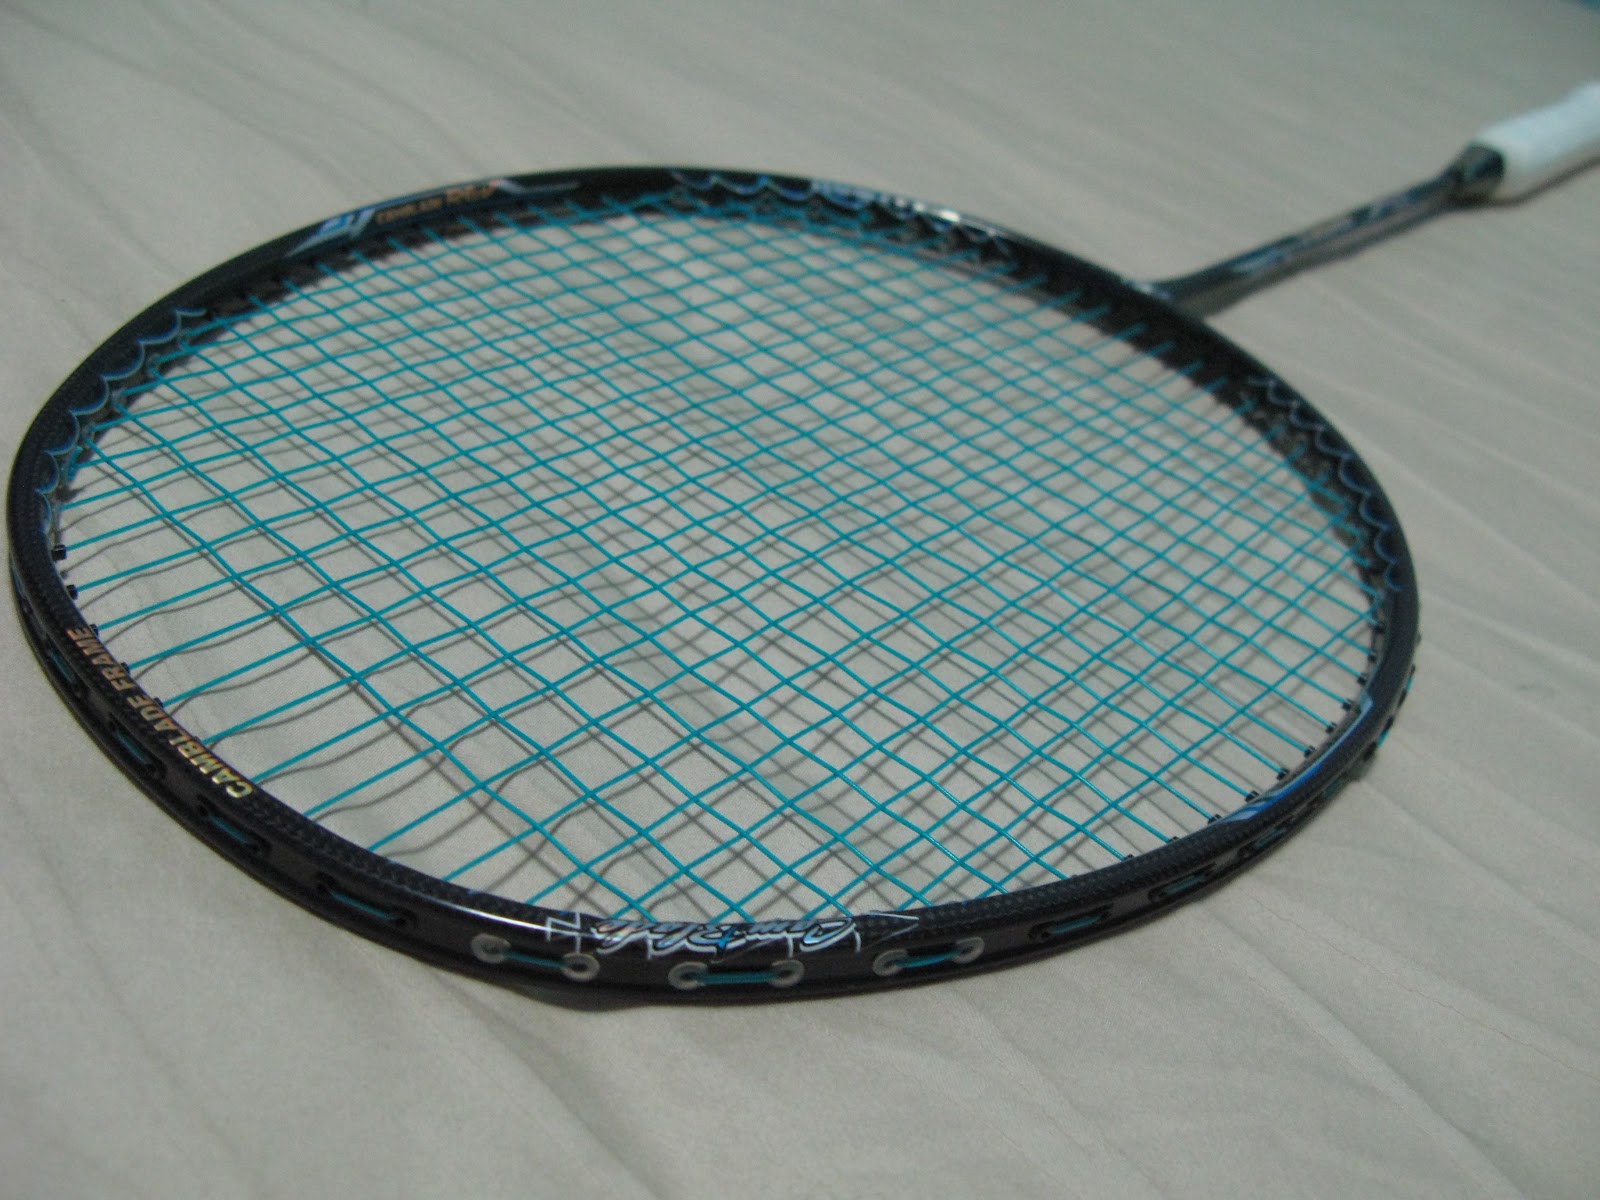 TOALSON TOA GOLD 6300 Full High Modulus Graphite Pro Badminton Racket Strung 